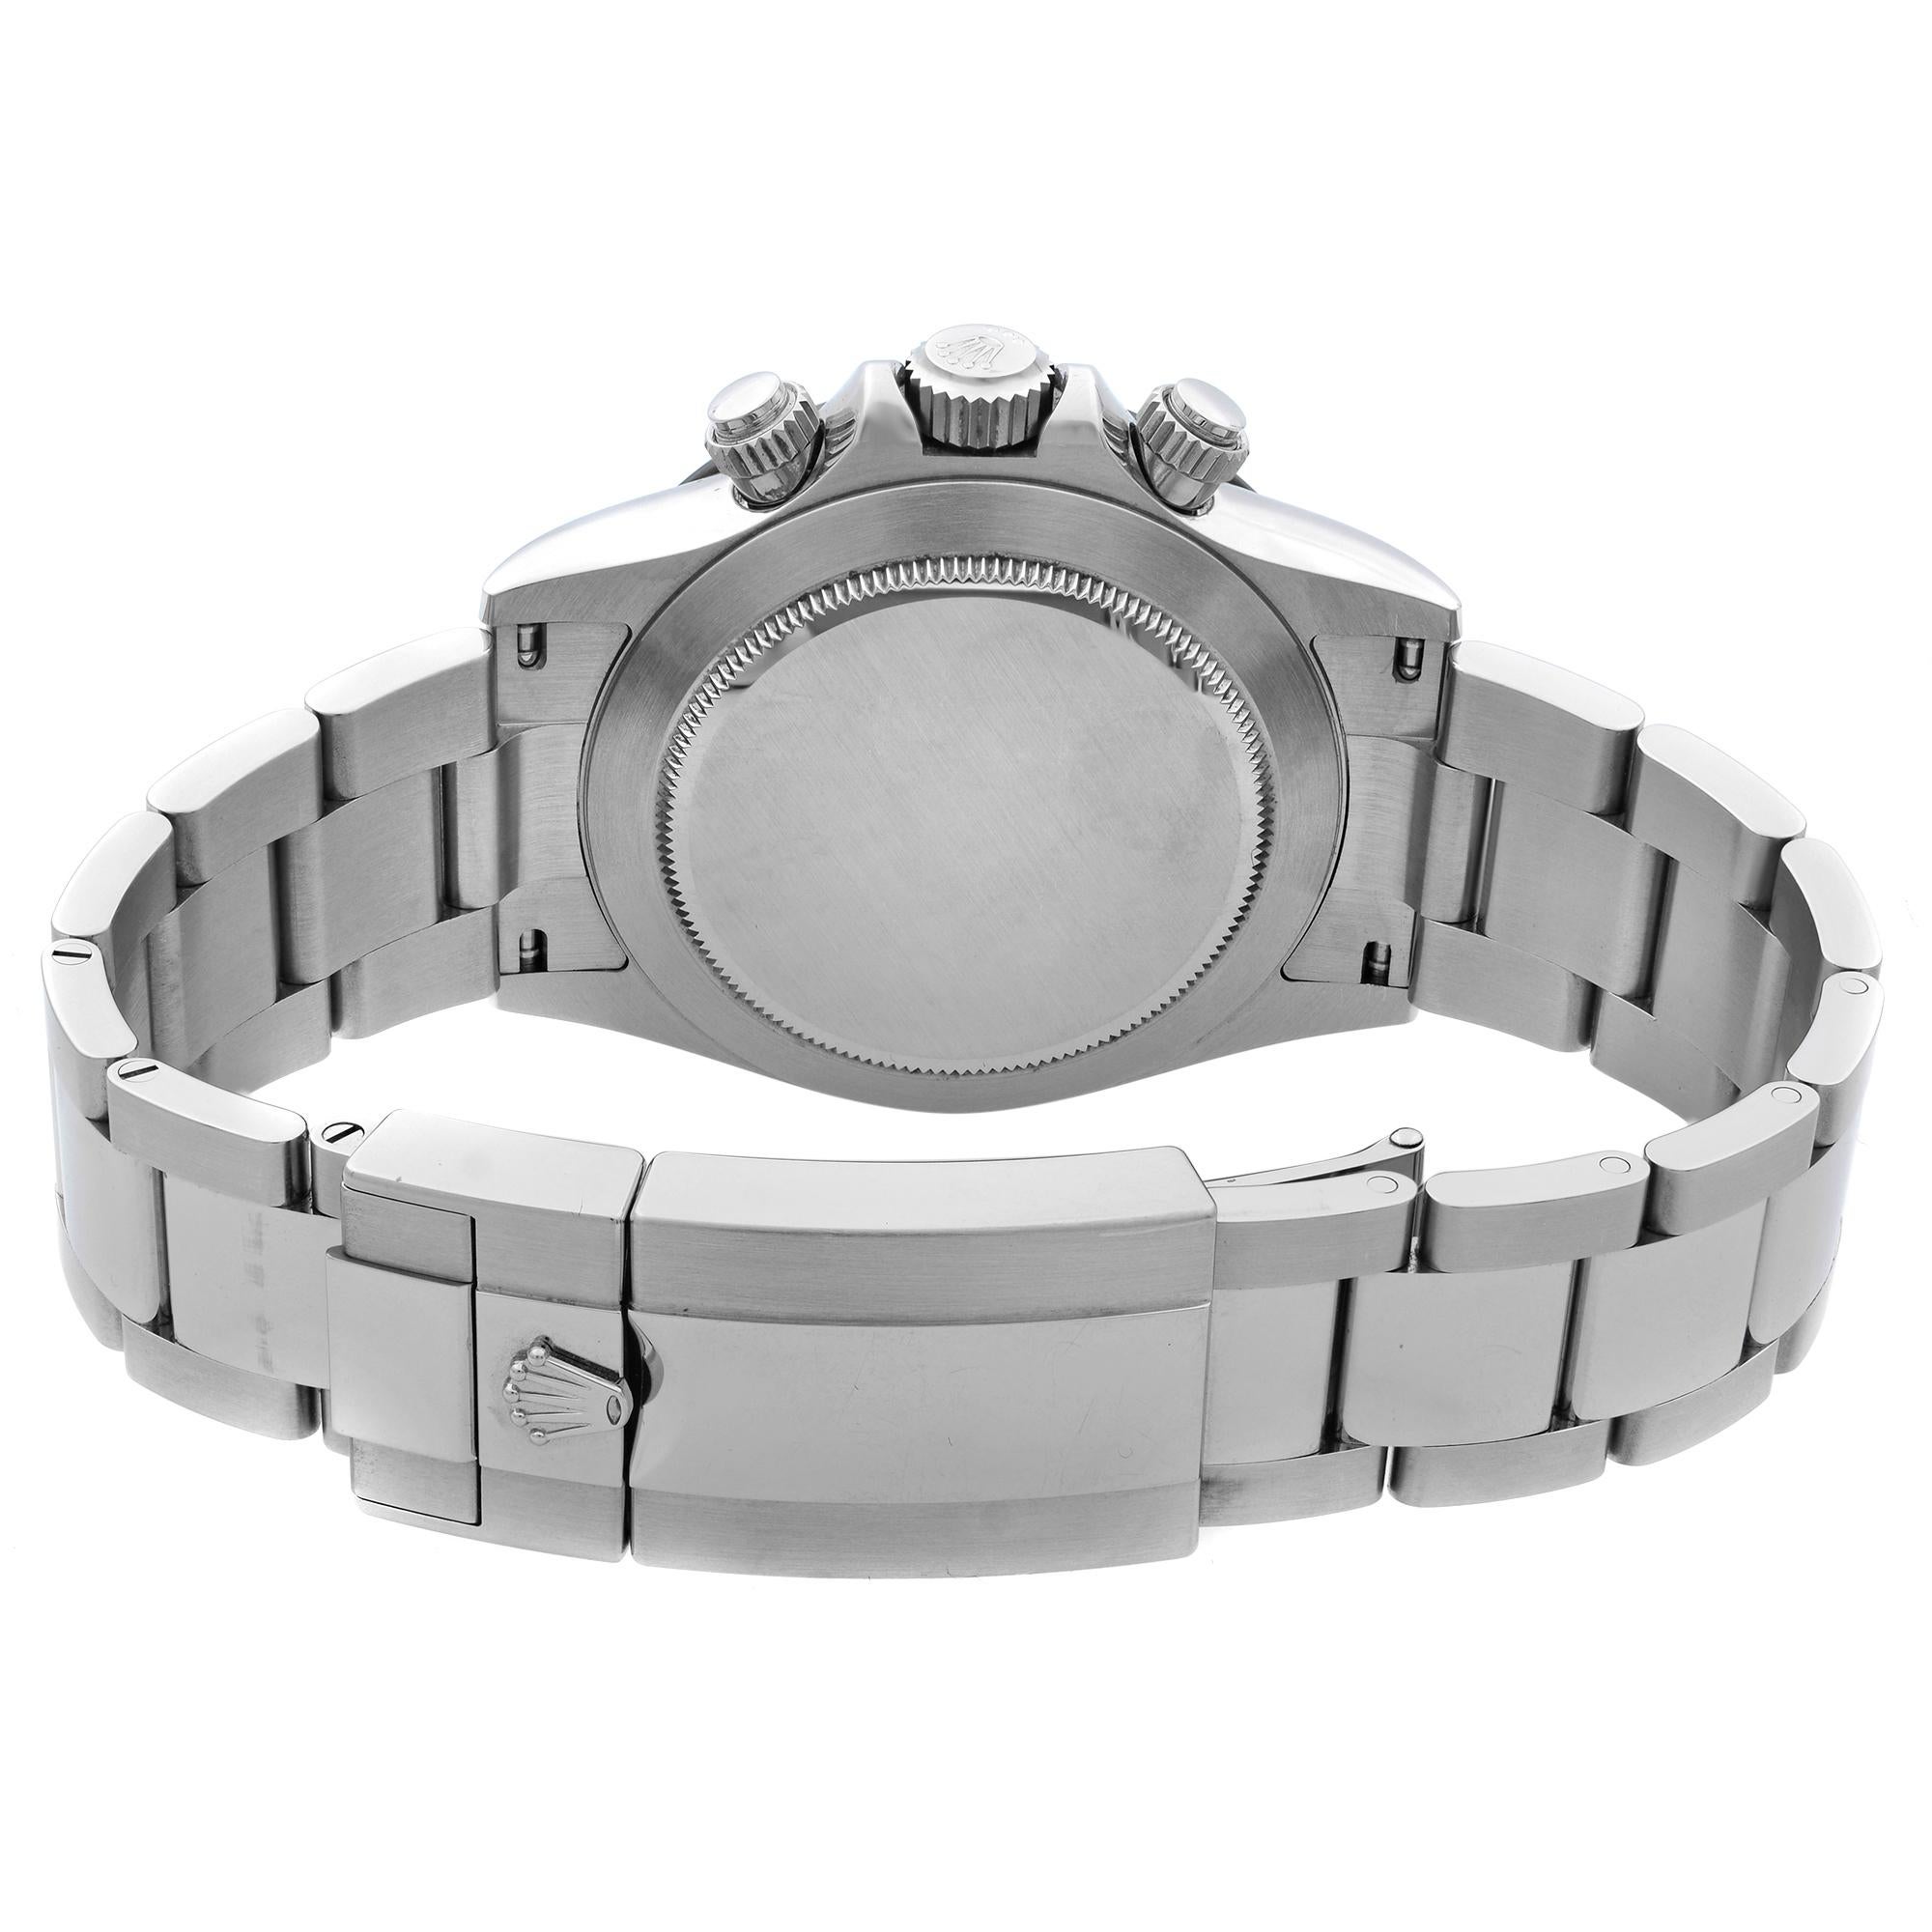 Rolex Cosmograph Daytona Steel Ceramic Bezel White Dial Automatic Watch 116500LN 2